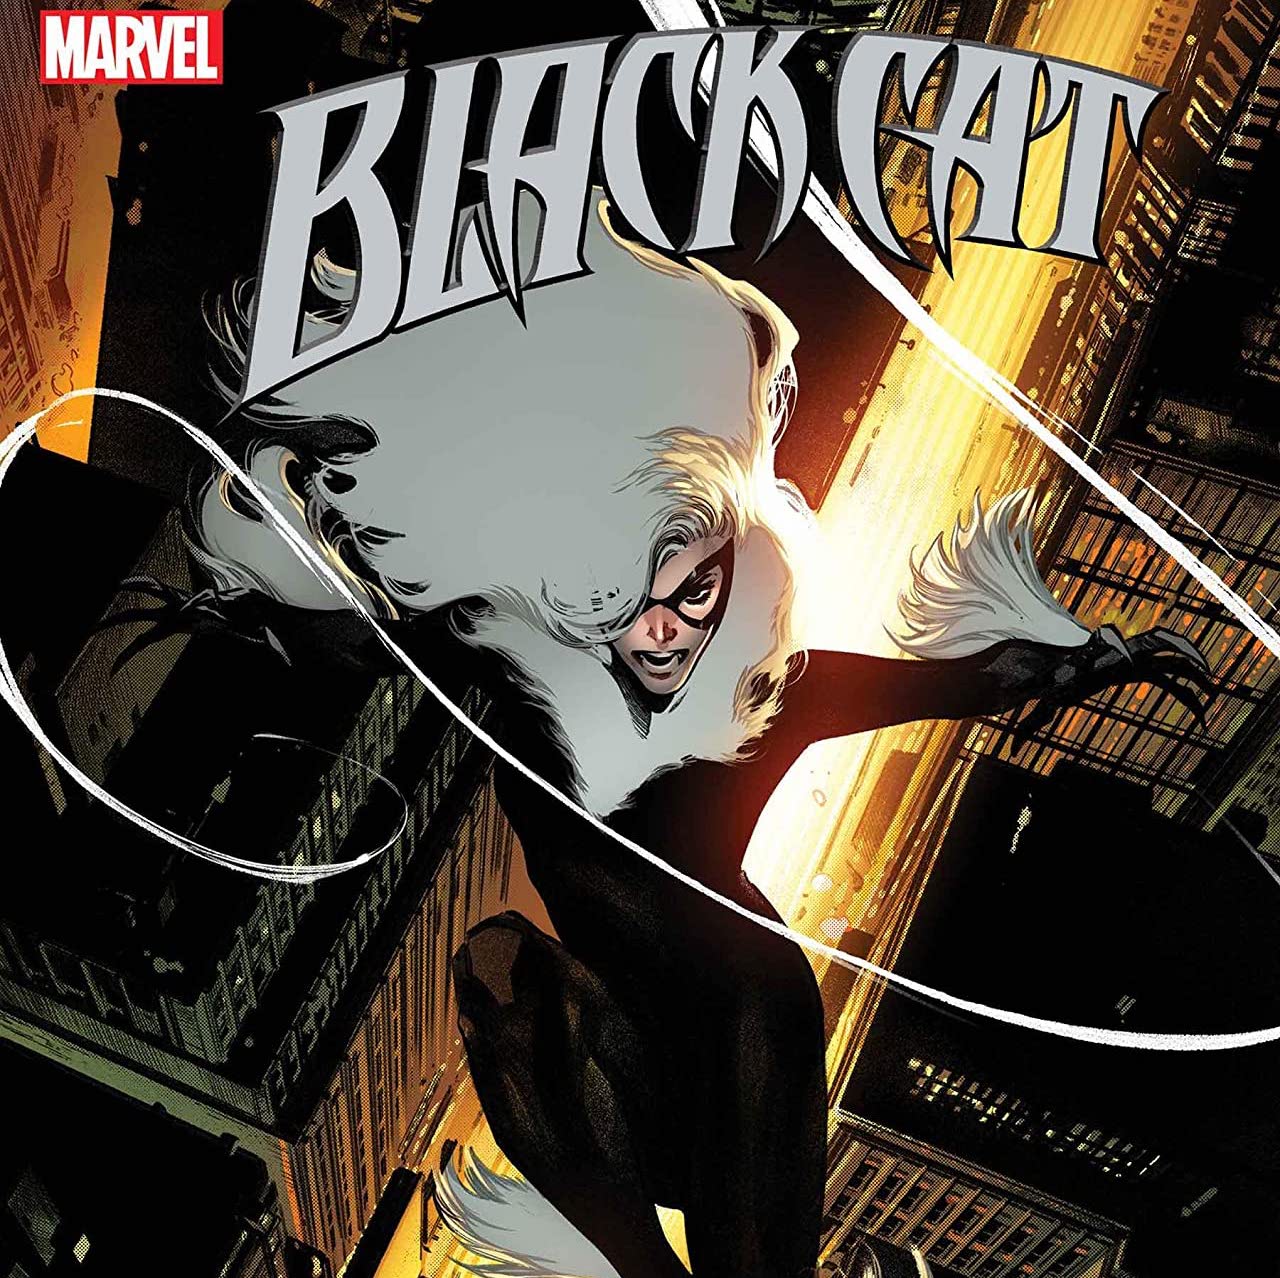 EXCLUSIVE Marvel Preview: Black Cat #5